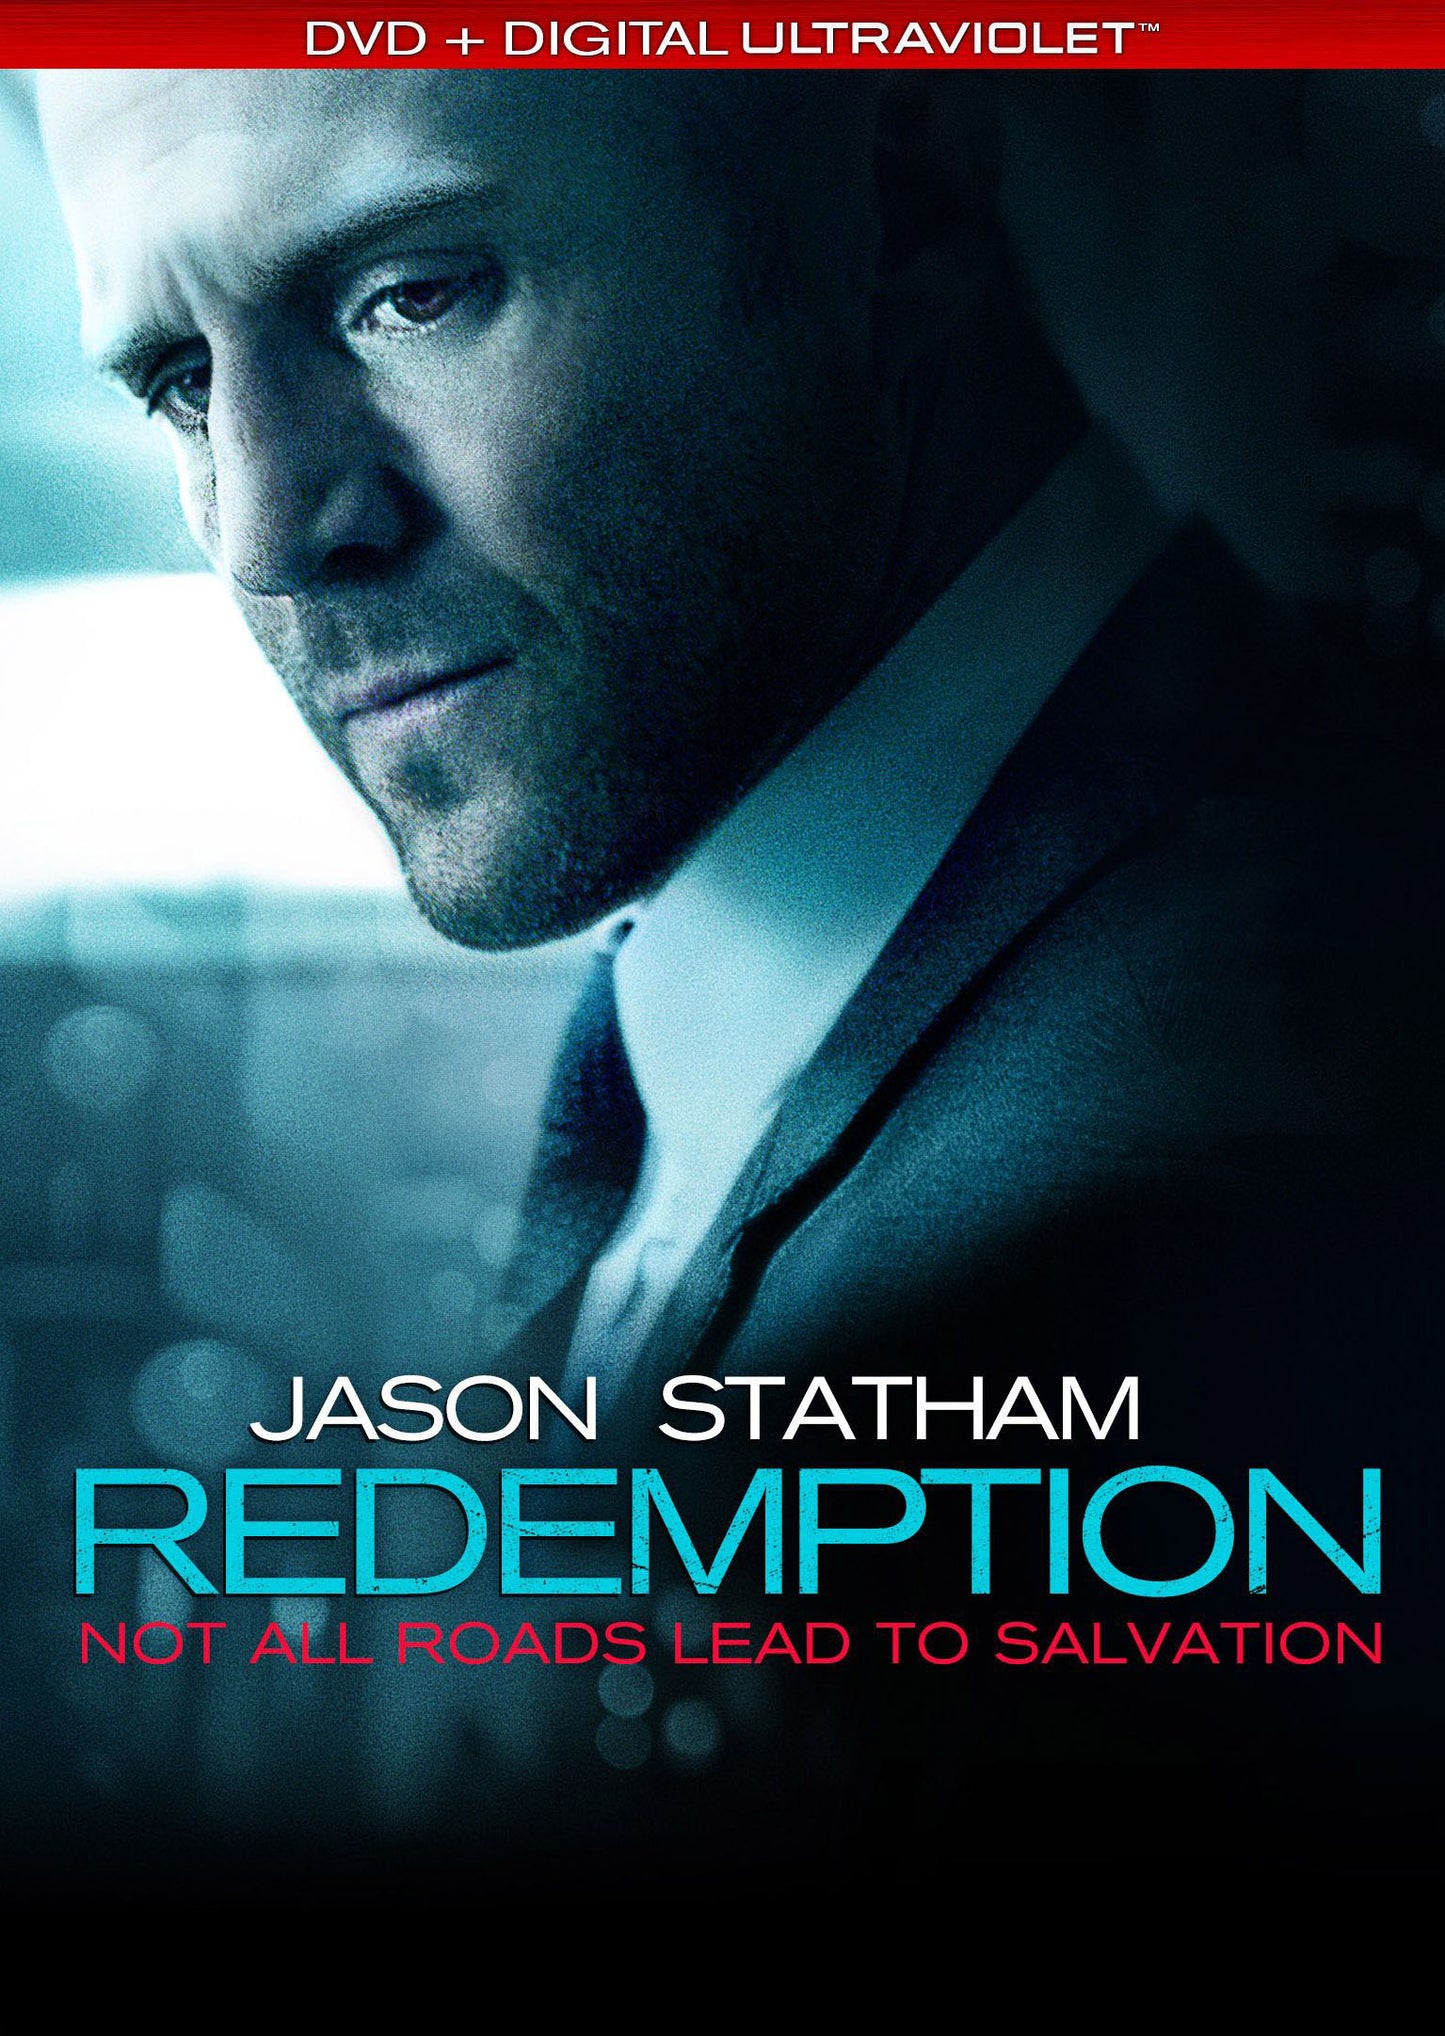 Redemption [Includes Digital Copy] cover art